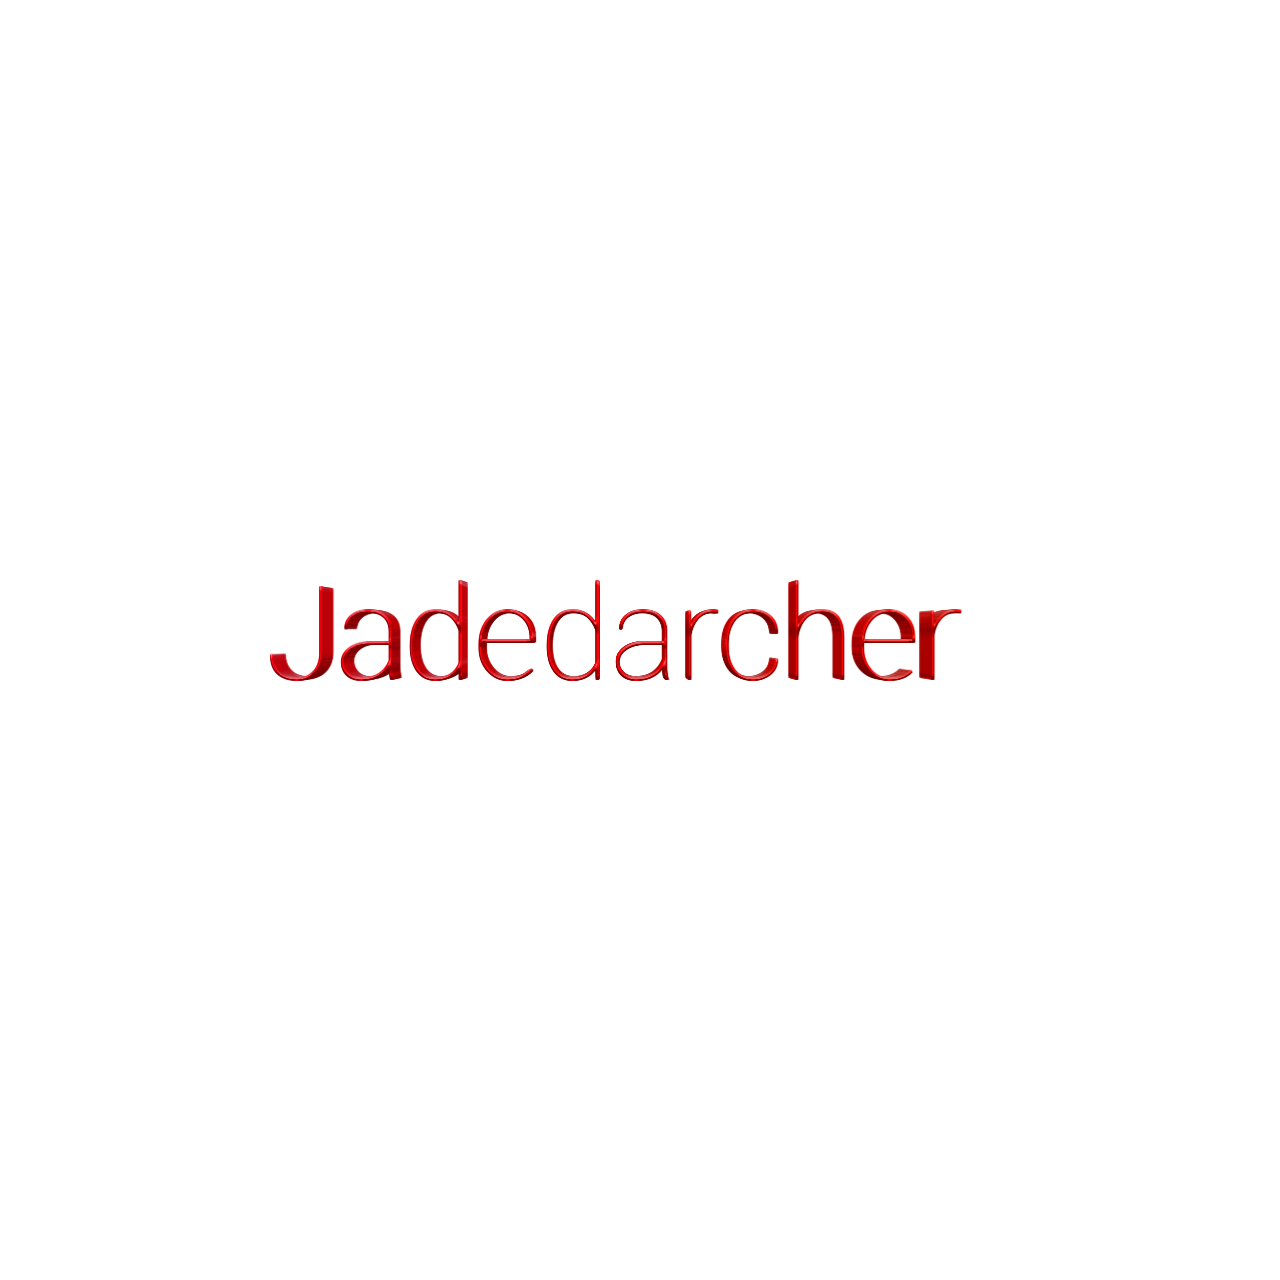 Banner for Jadedarcher server